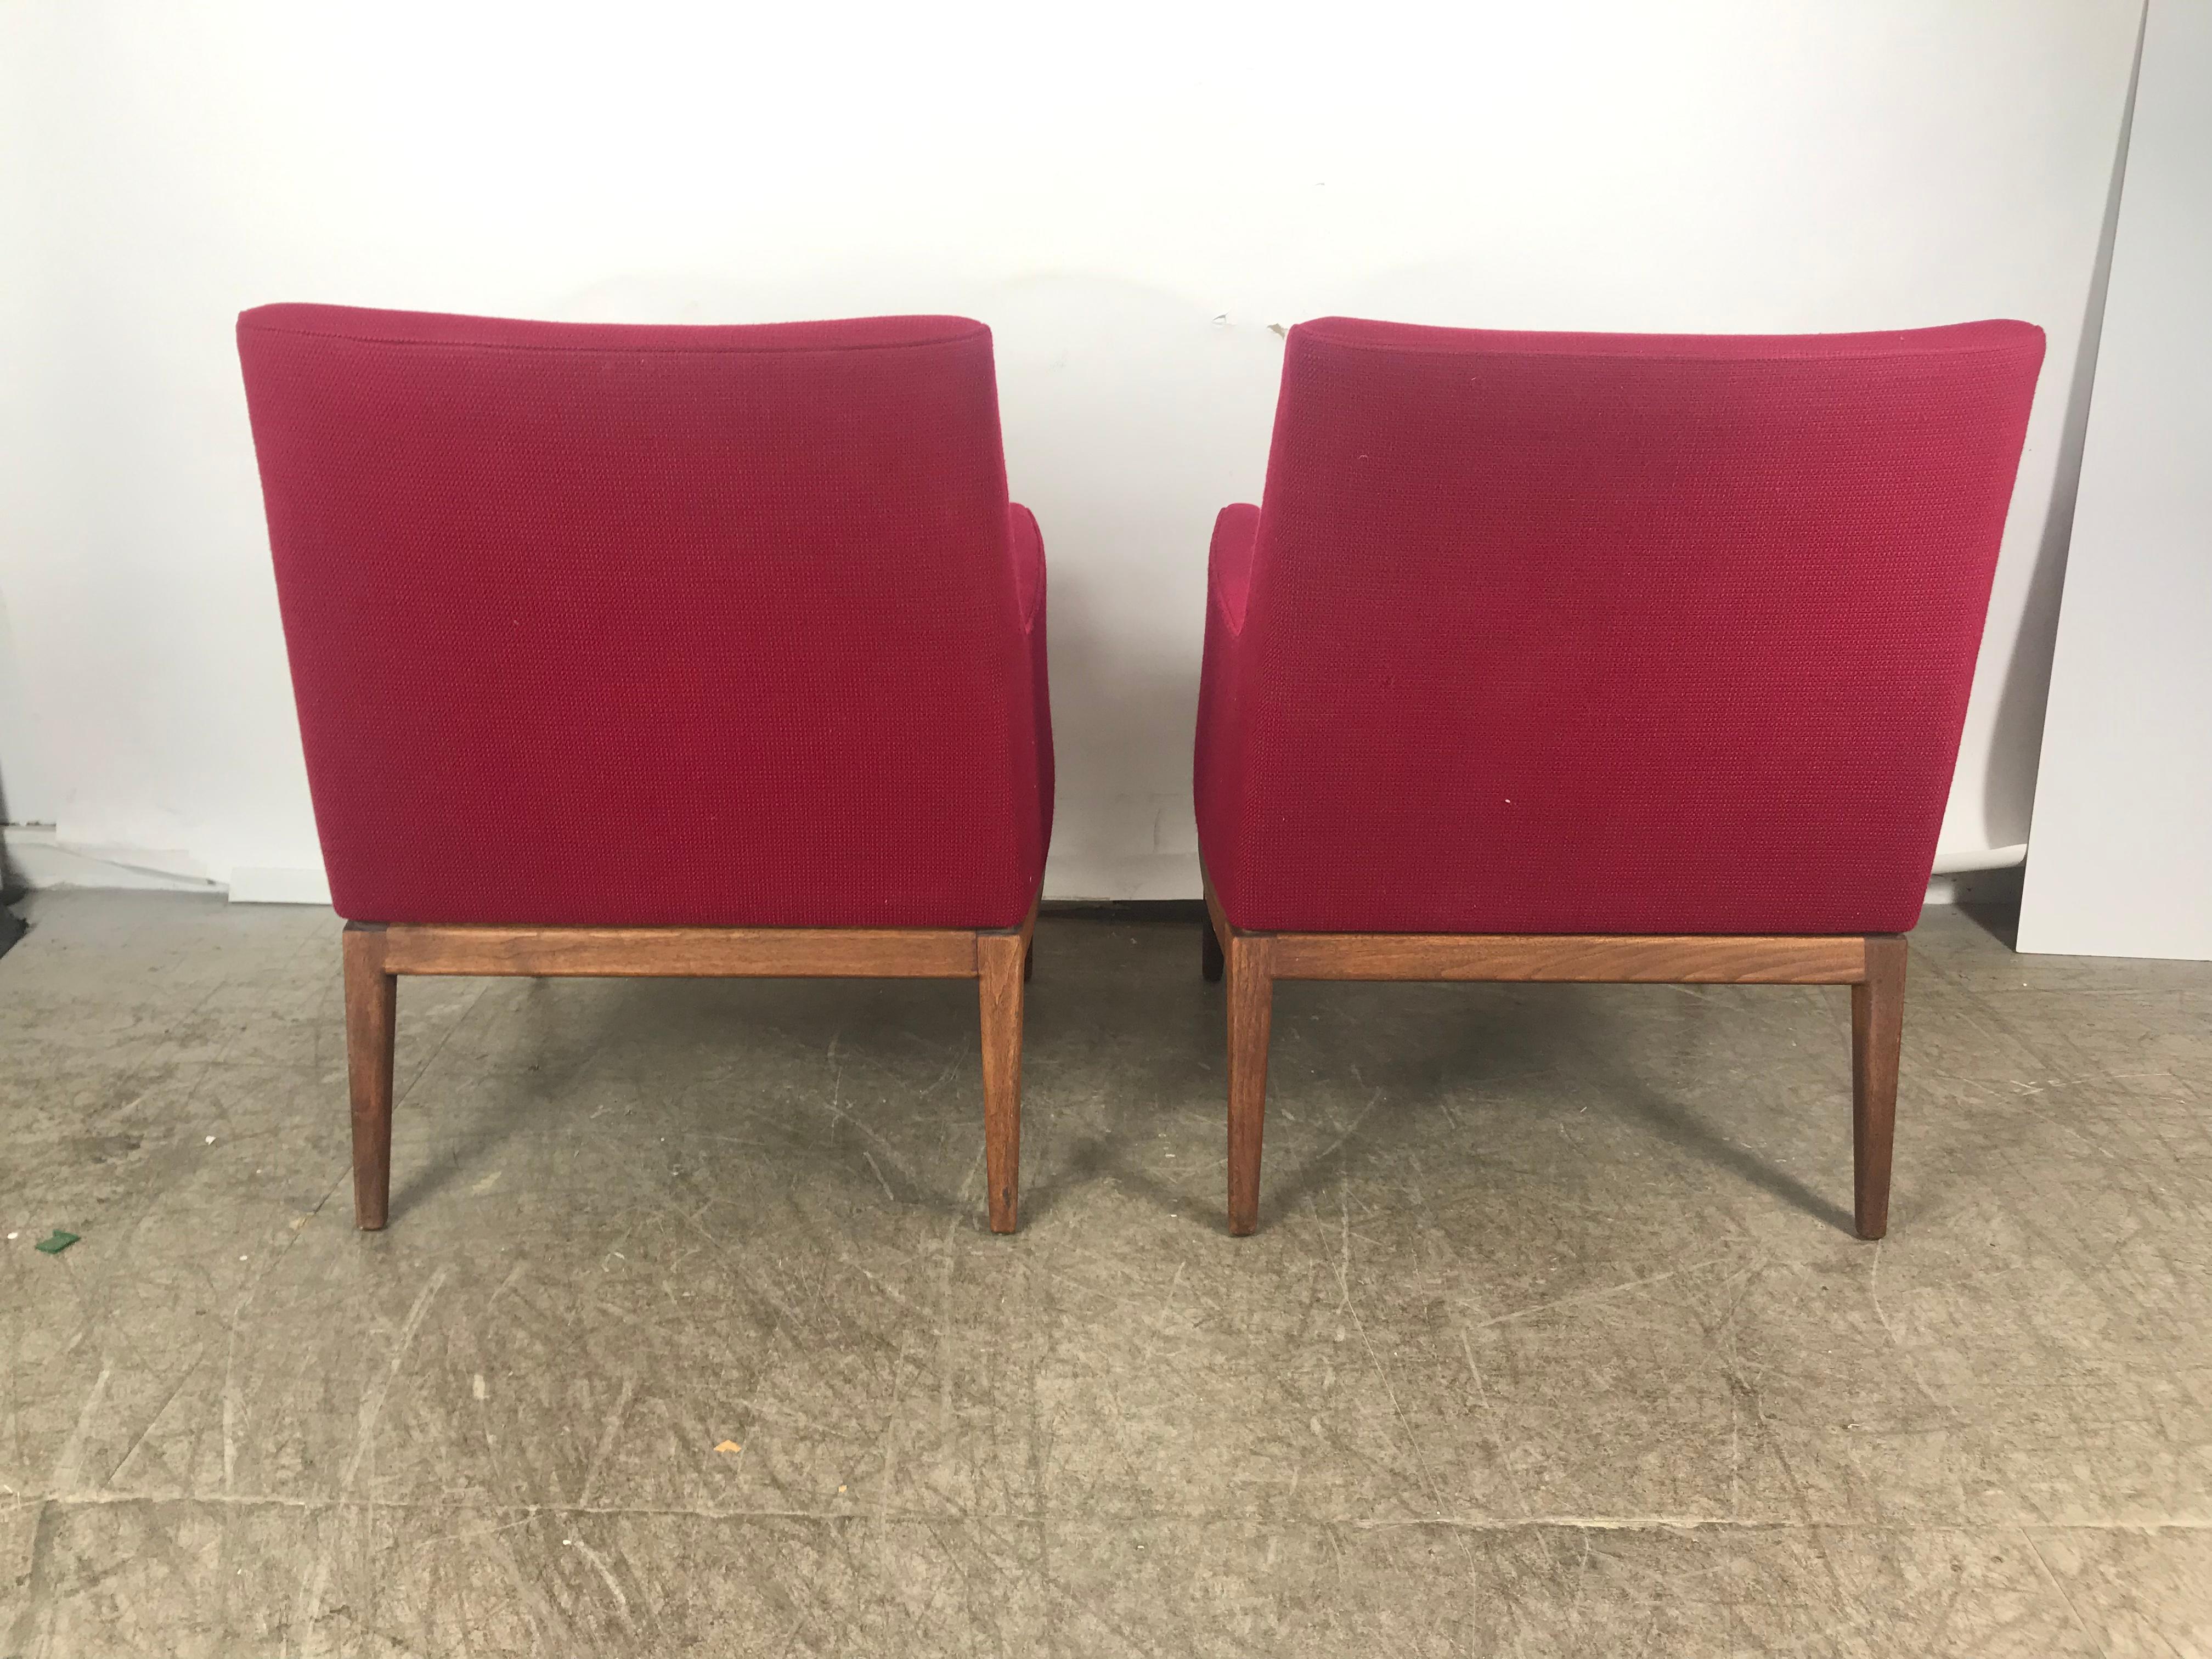 Classic Modernist Lounge Chairs Designed by Jens Risom, Jens Risom Design Inc 1